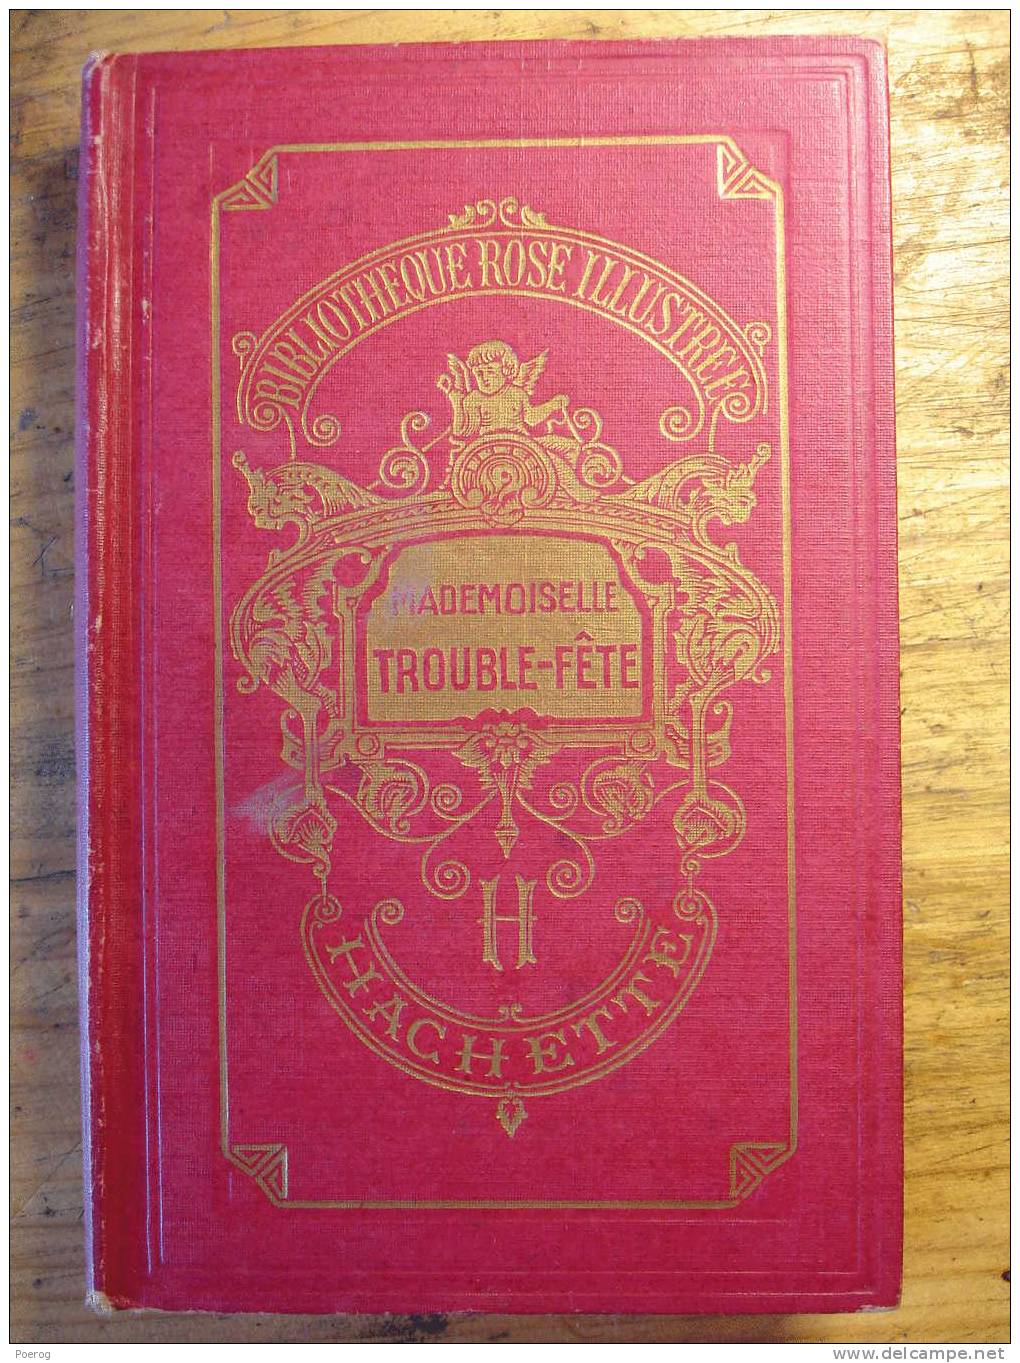 MADEMOISELLE TROUBLE FETE - MAGDELEINE DU GENESTOUX - 1946 HACHETTE BIBLIOTHEQUE ROSE ILLUSTREE ILLUSTRATIONS A. PECOUD - Bibliotheque Rose